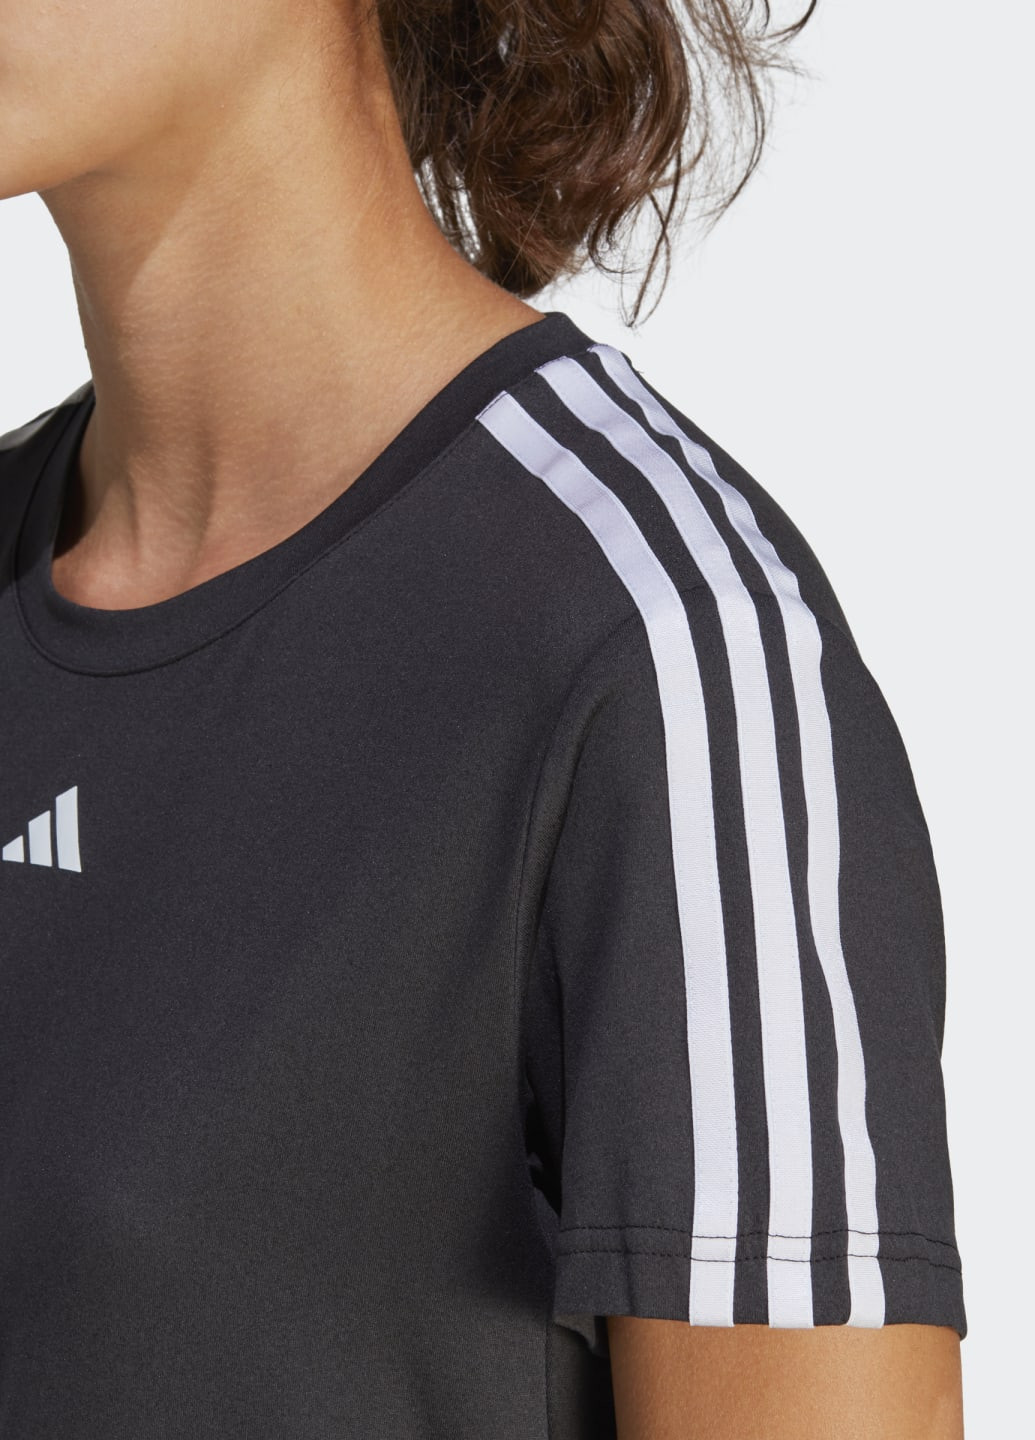 Черная всесезон футболка aeroready train essentials 3-stripes adidas